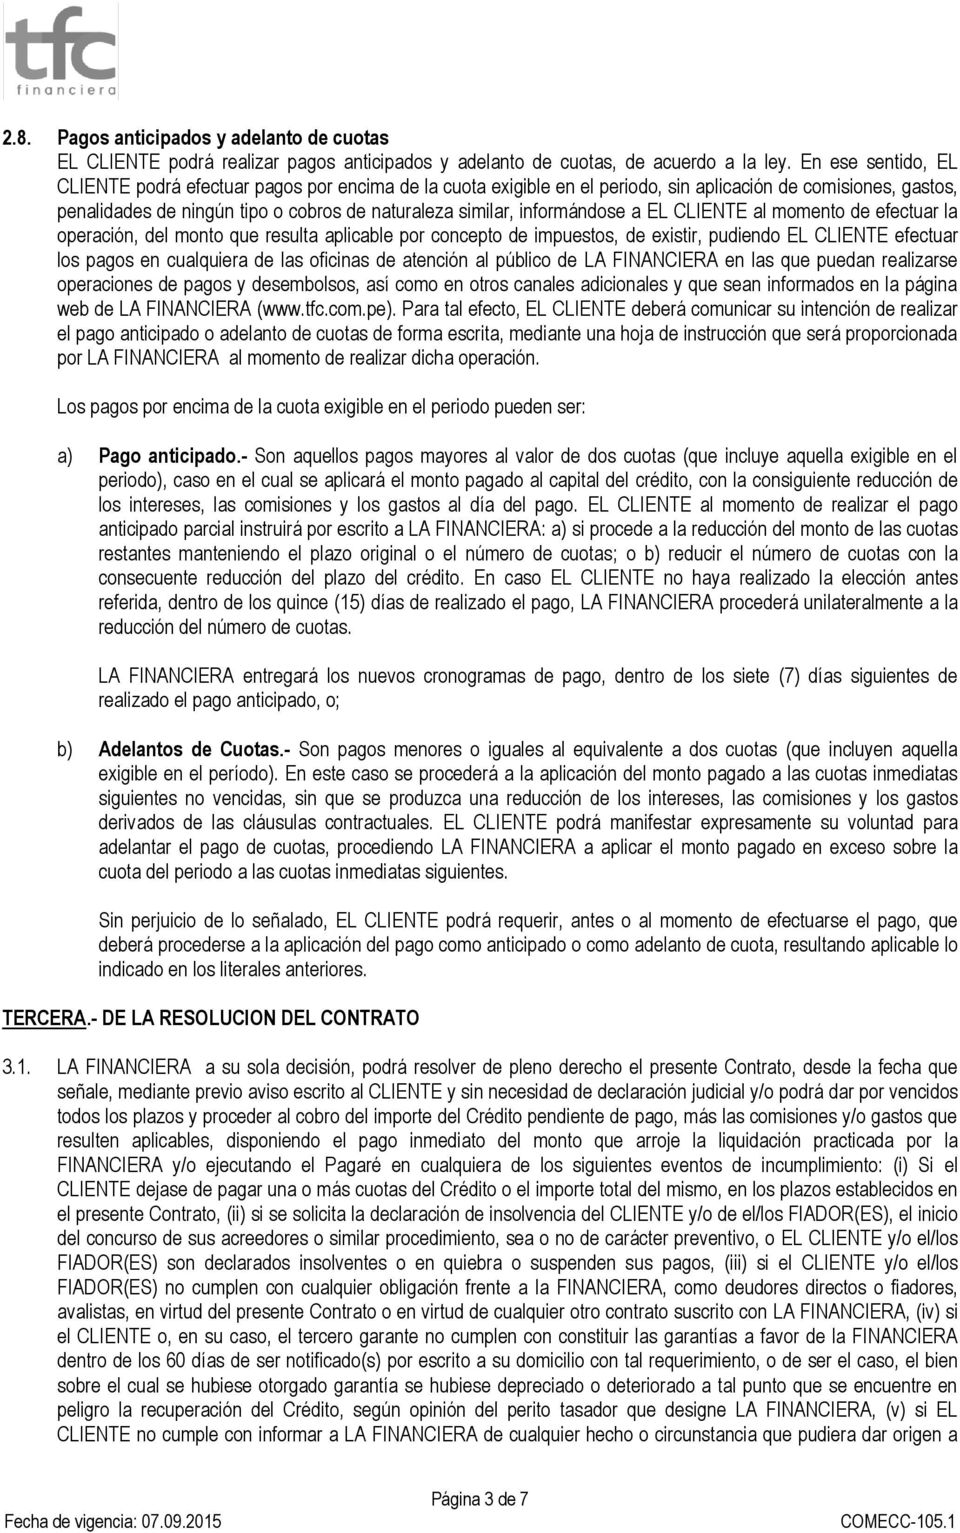 CONTRATO DE CRÉDITO COMERCIAL - PDF Descargar libre